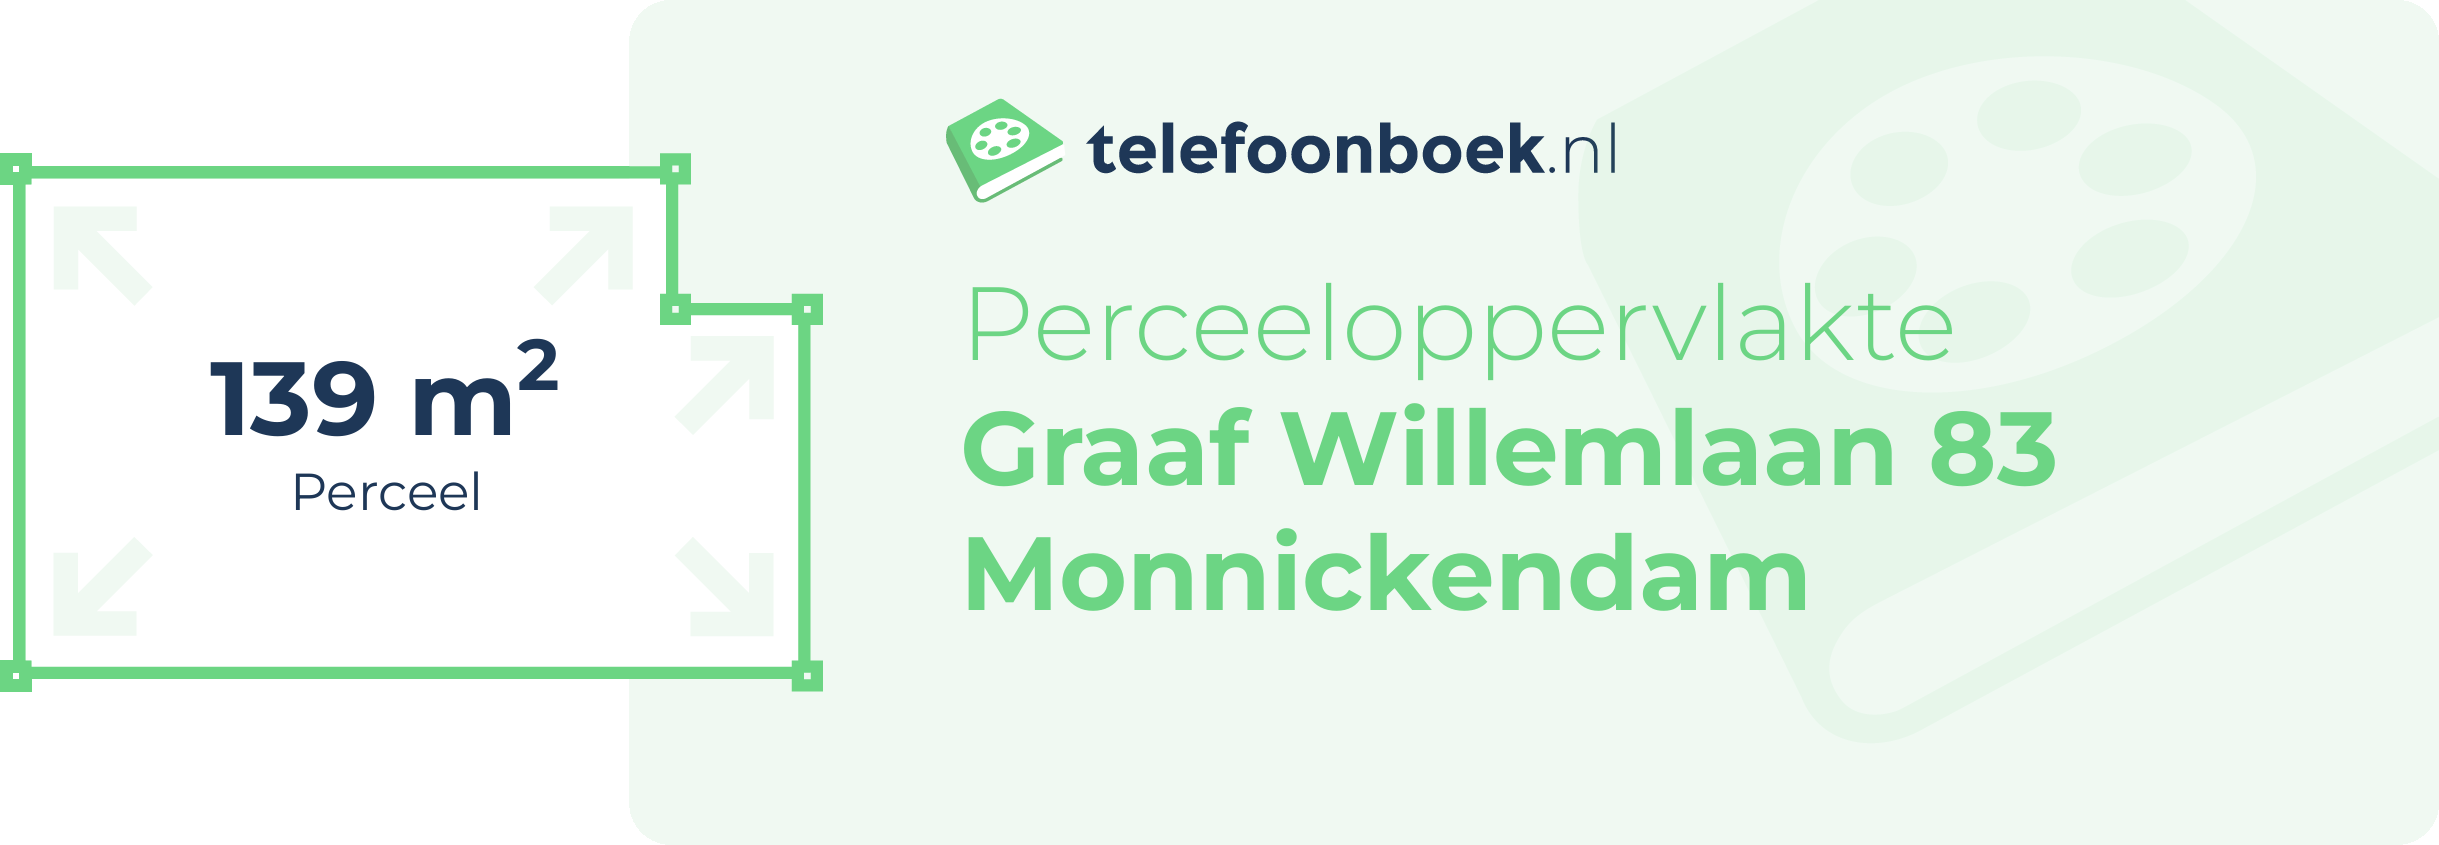 Perceeloppervlakte Graaf Willemlaan 83 Monnickendam